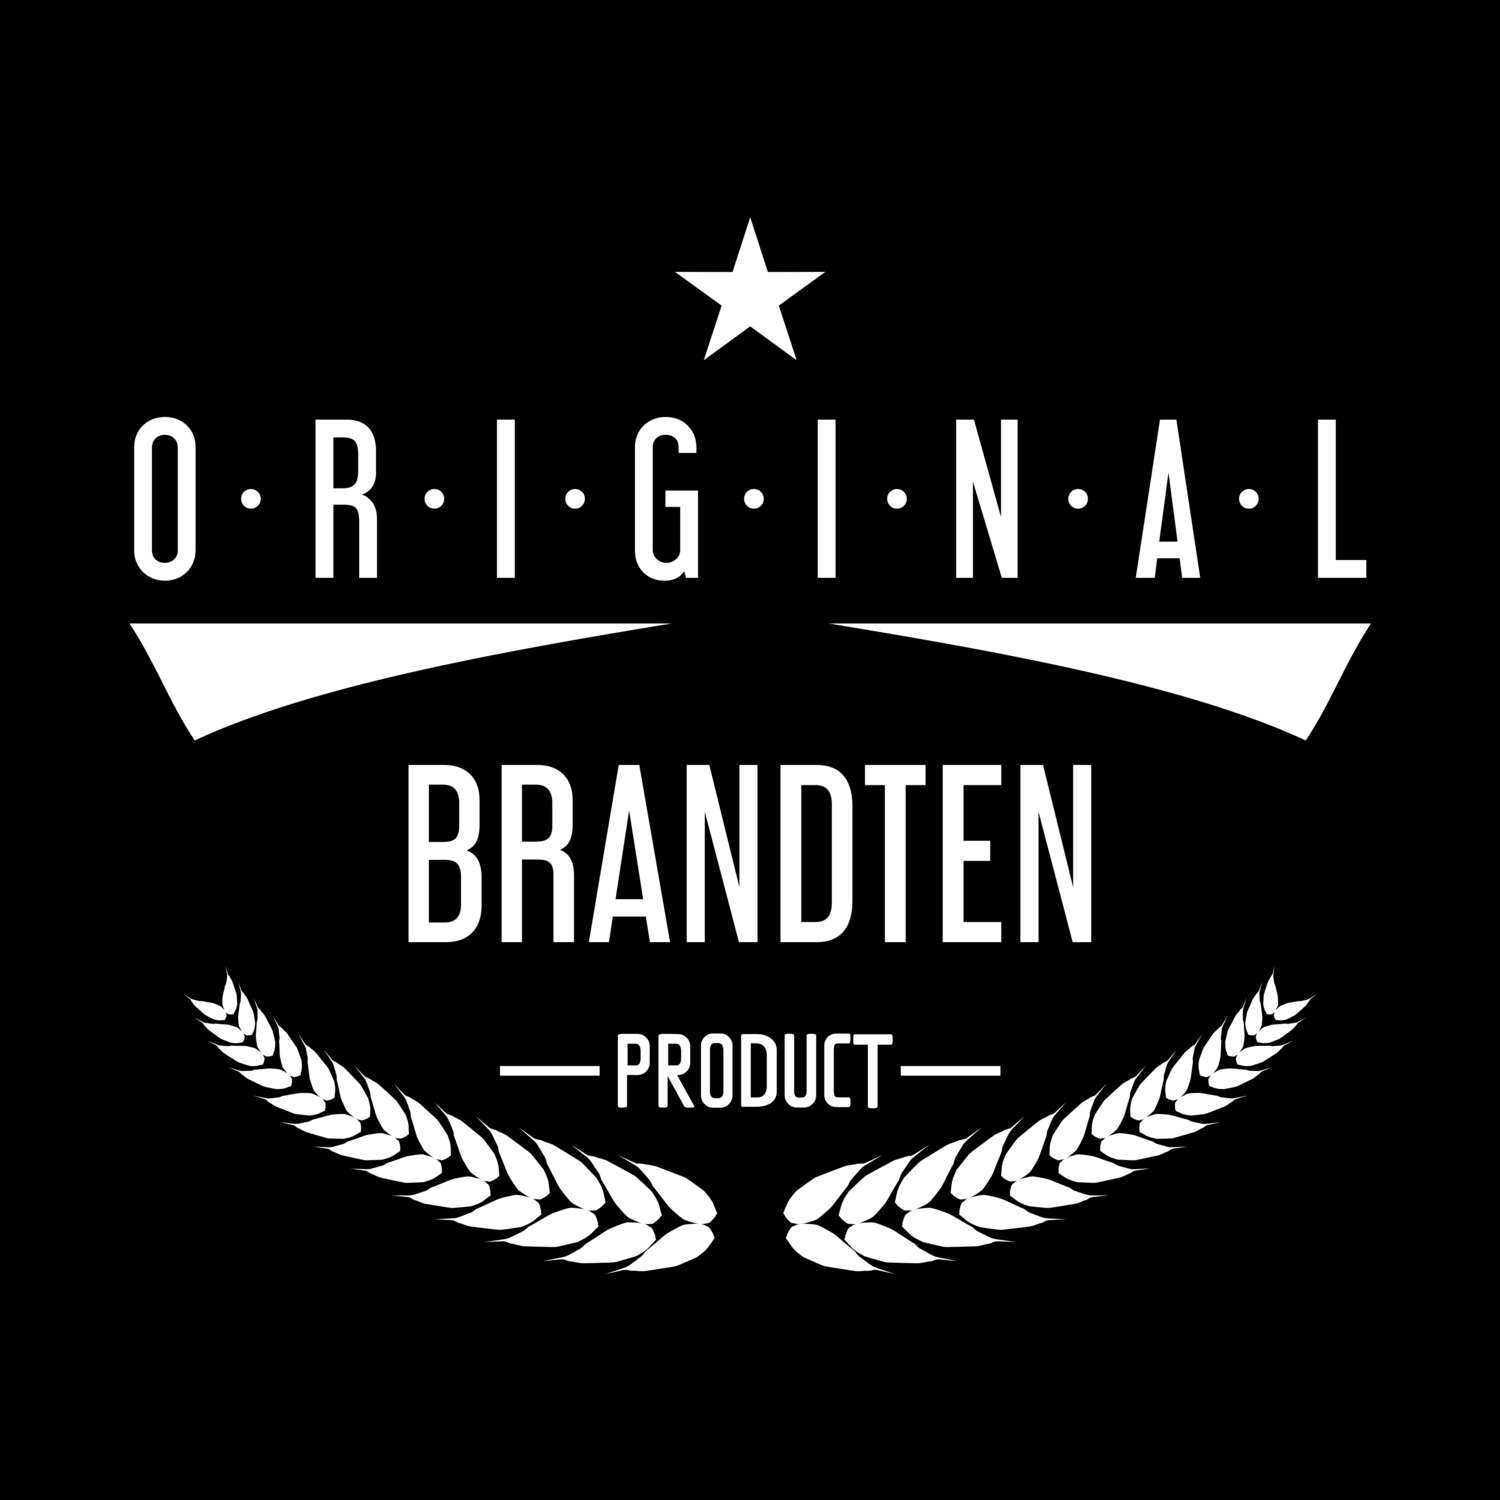 Brandten T-Shirt »Original Product«